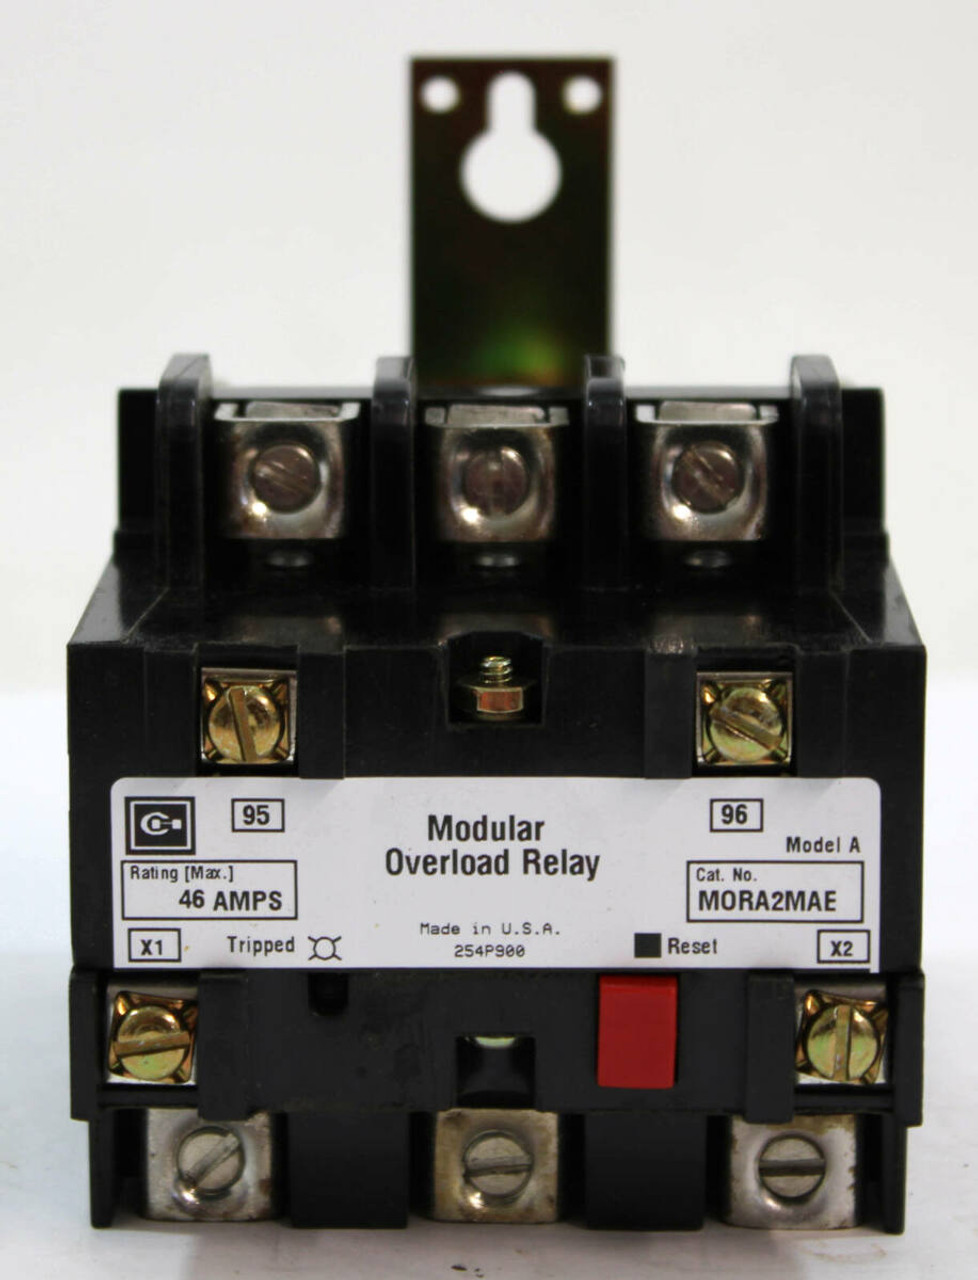 Cutler Hammer MORA2MAE Modular Overload Relay 46A 600V 3P 120 VAC Control Volts, Style 1373D02G38, Model A